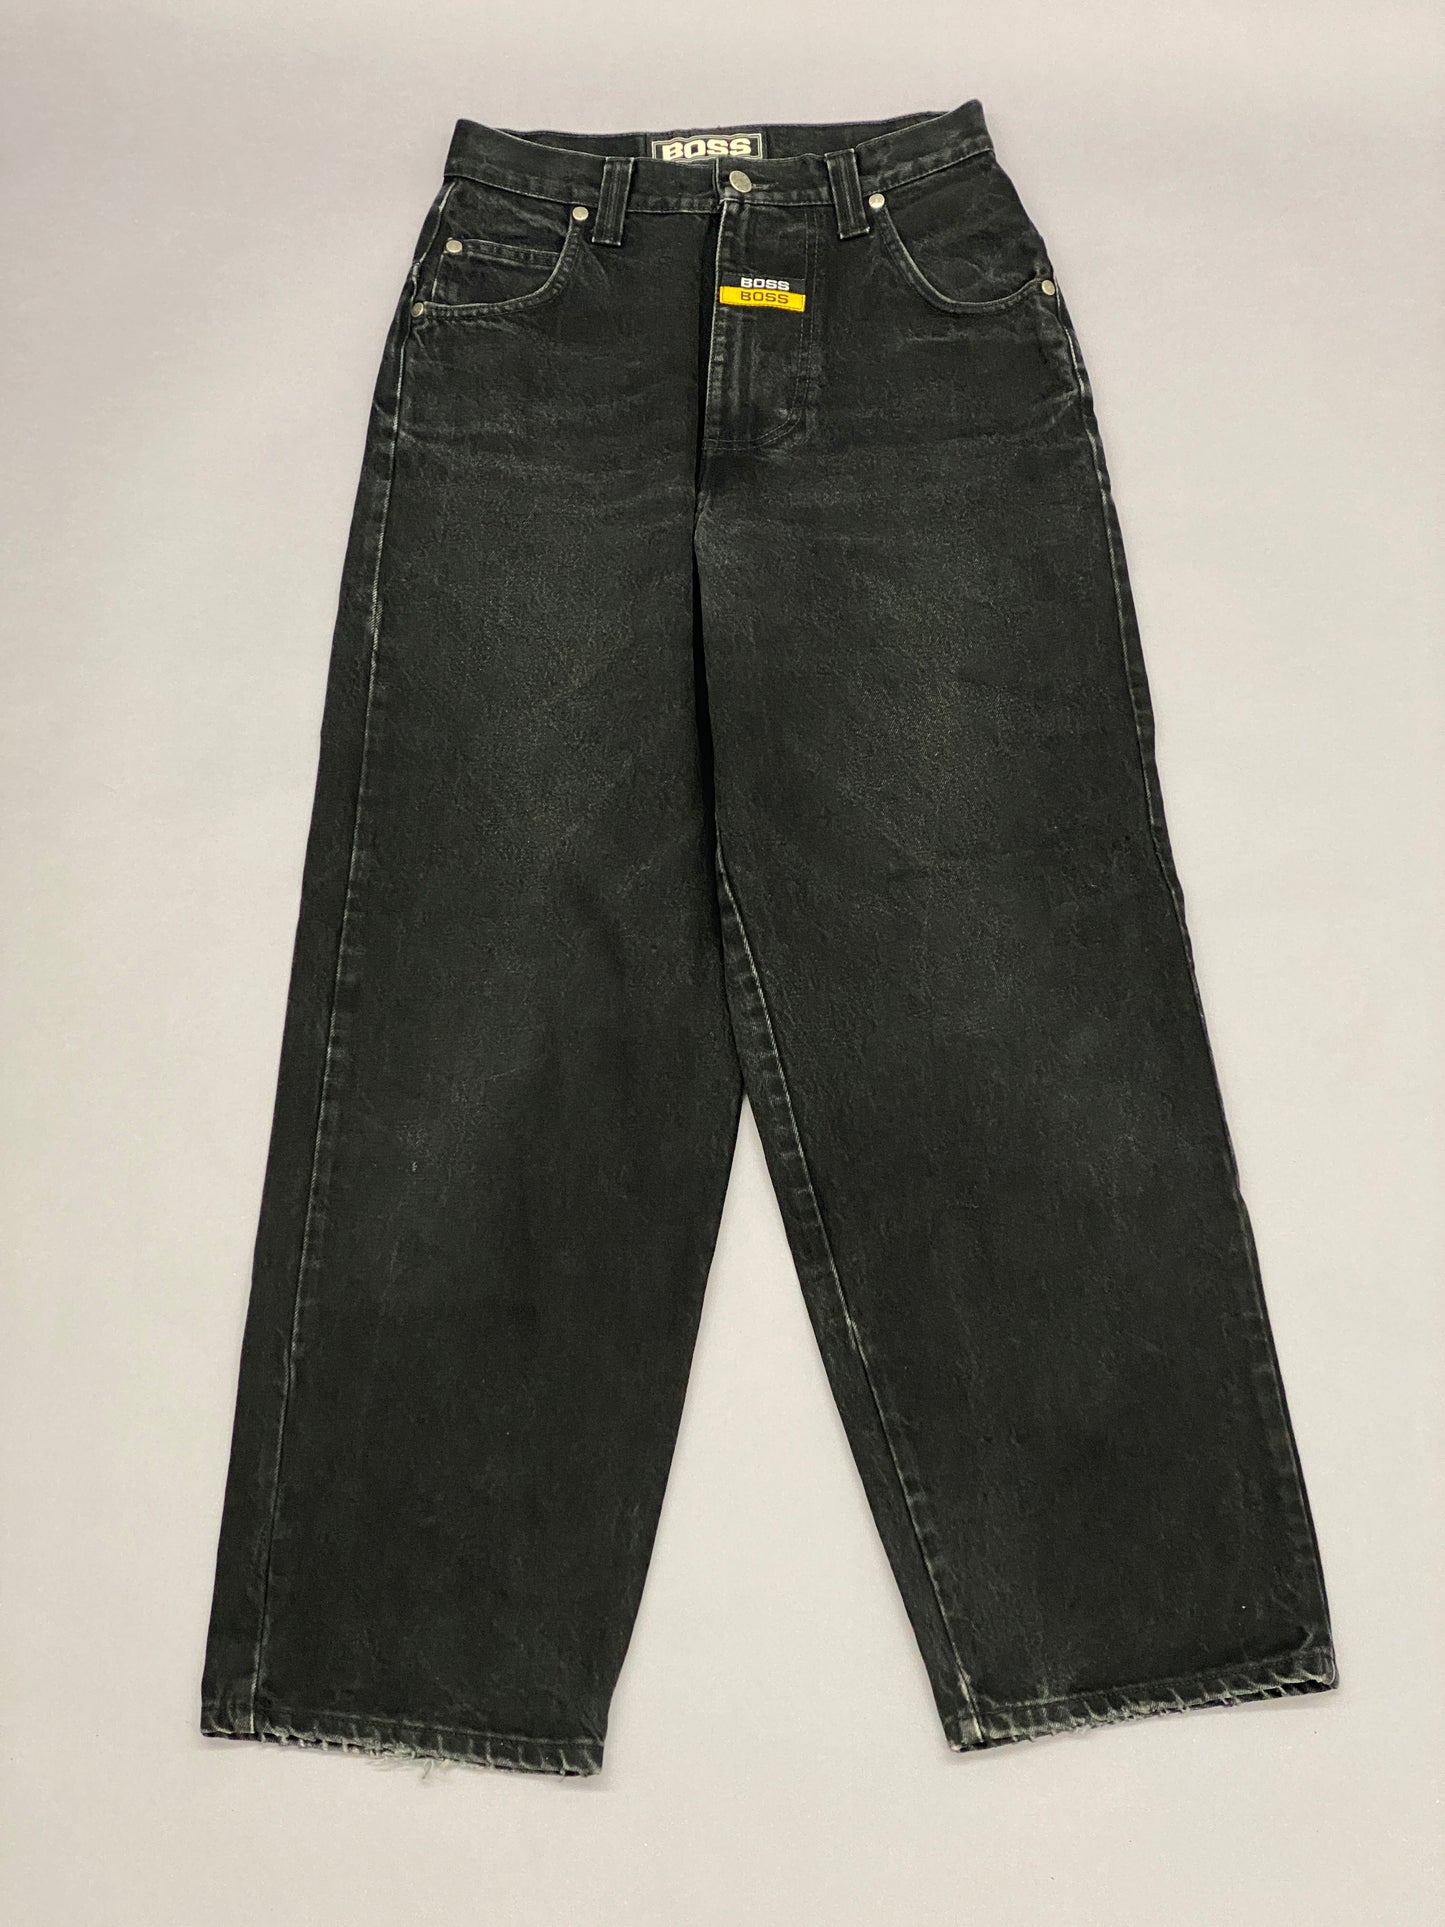 BOSS Vintage Baggy Jeans - 30 x 30